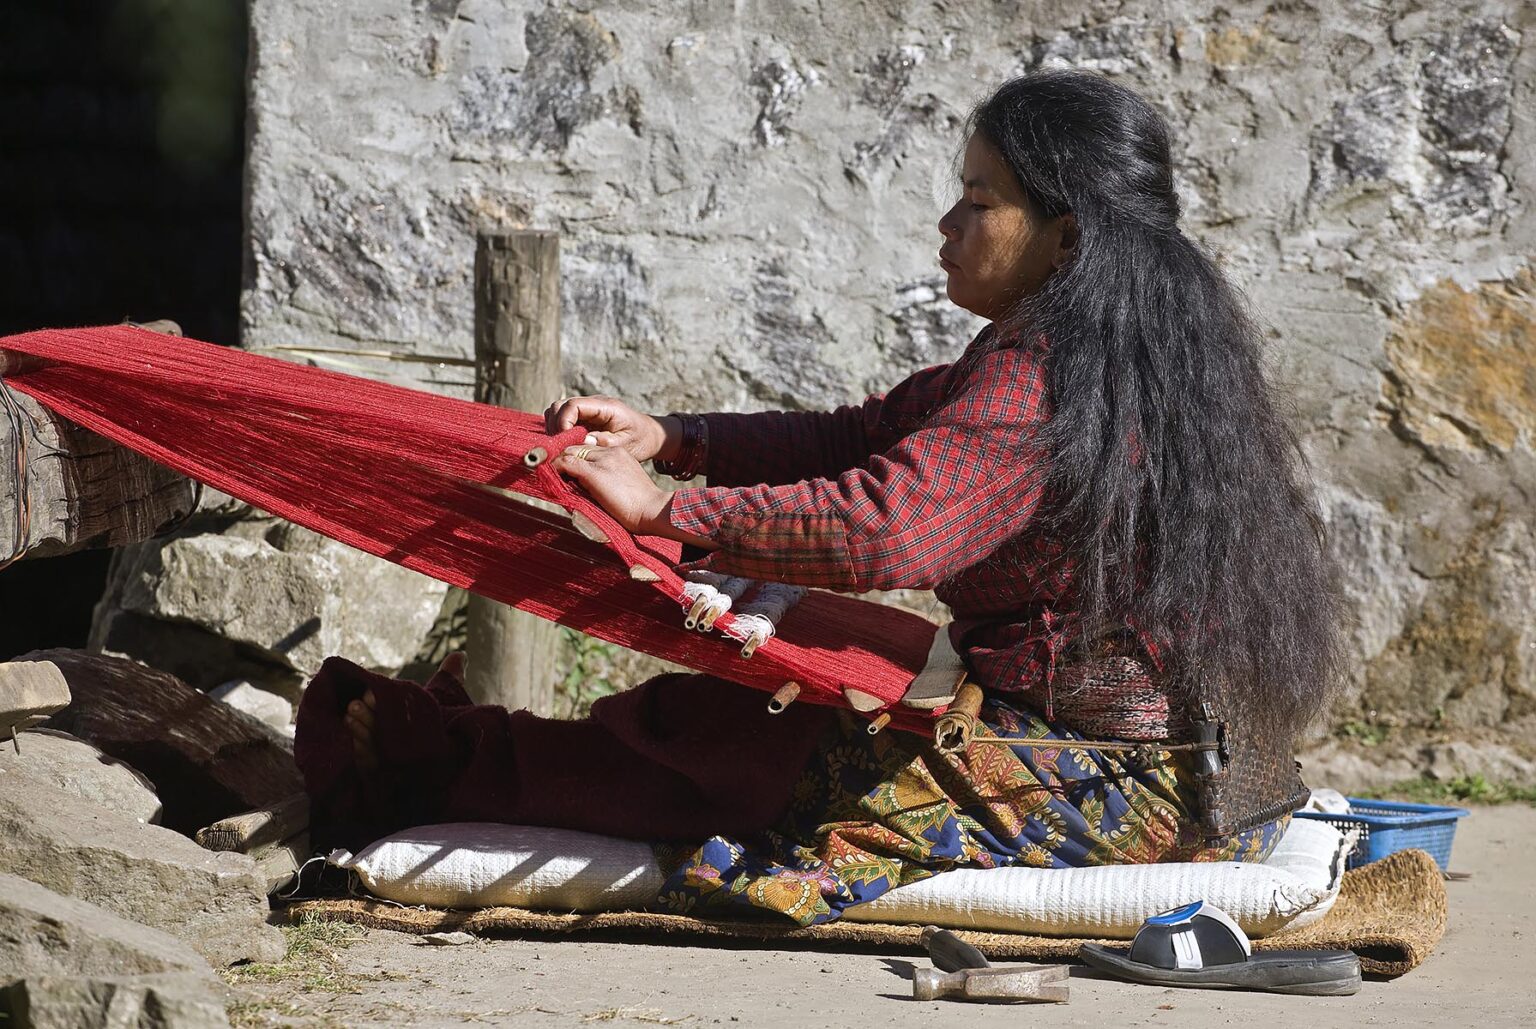 A tribal woman uses a BACKSTRAP LOOM to make red cloth in GYASUMDO VILLAGE near Manang on the ANNAPURNA CIRCUIT - NEPAL HIMALAYA